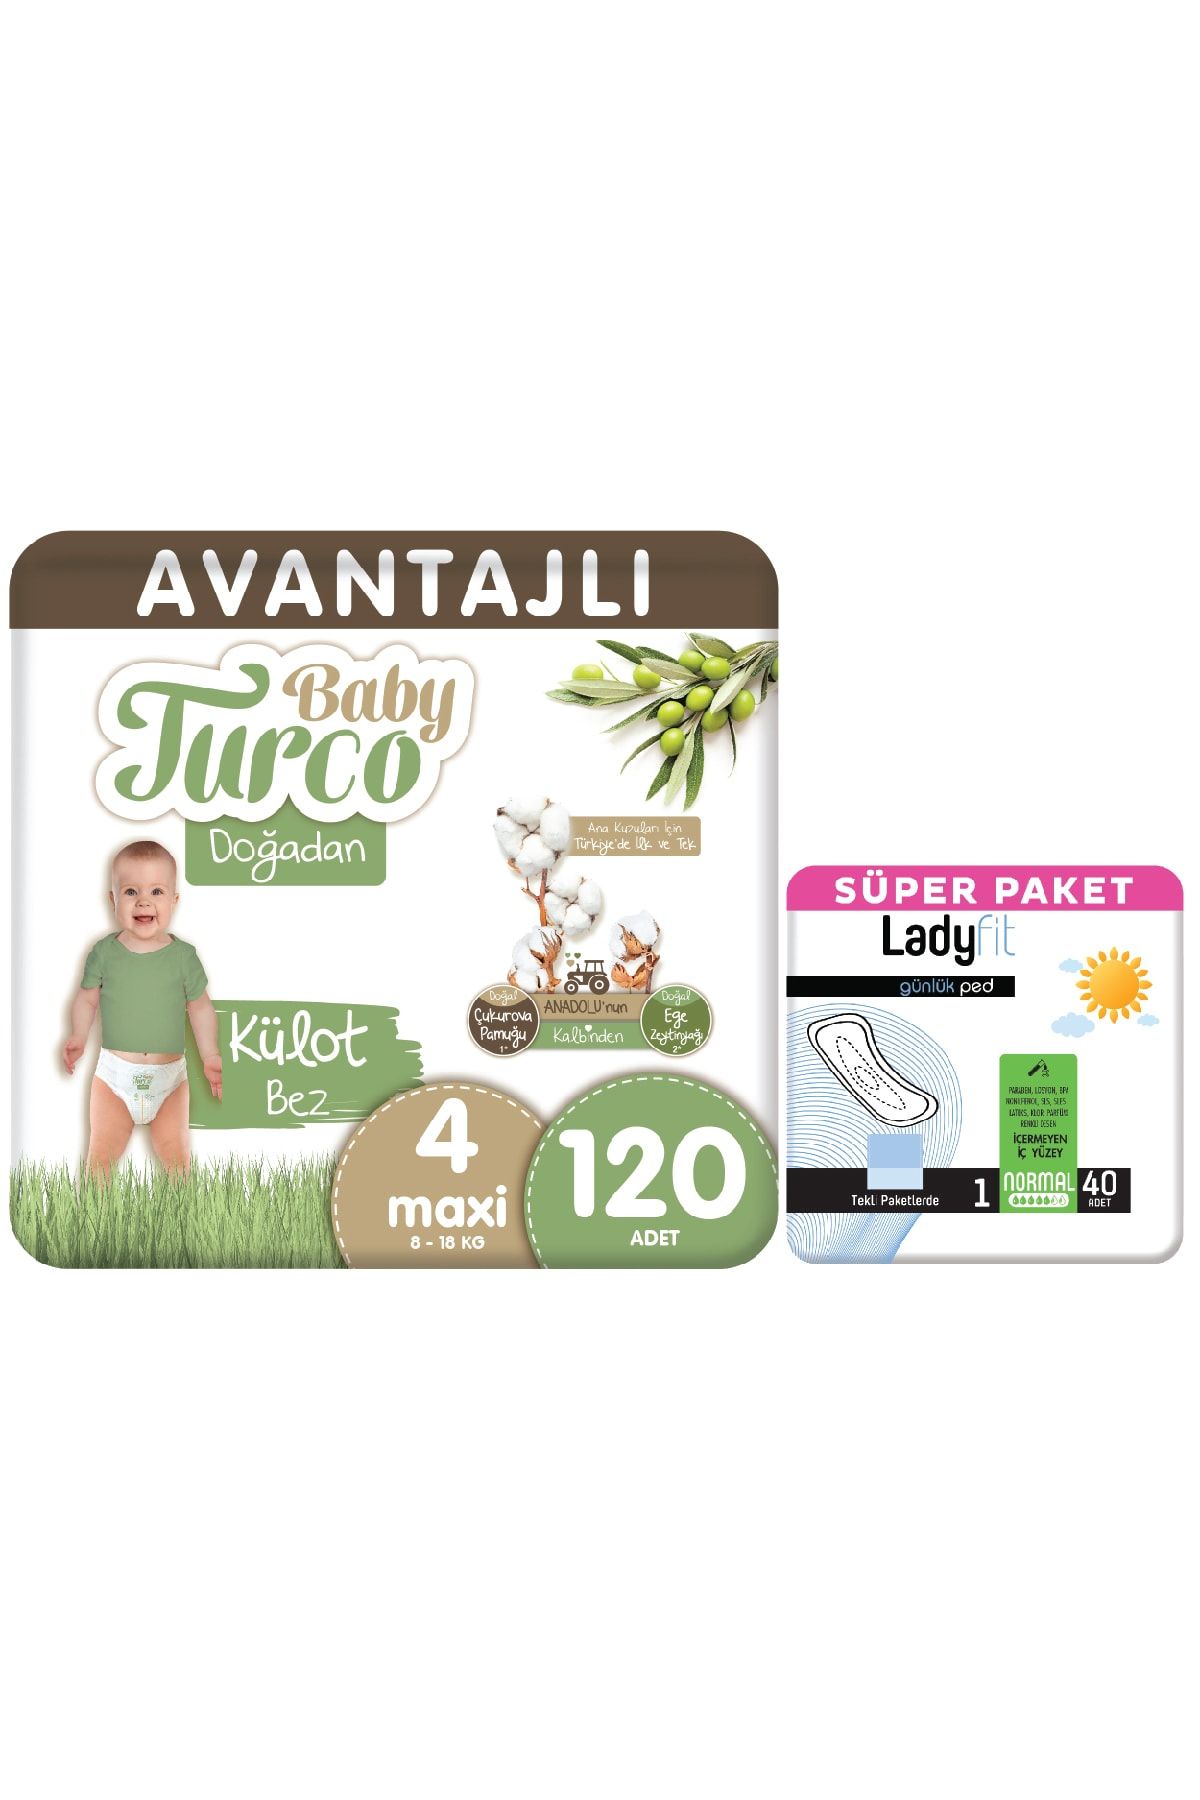 Baby Turco Doğadan Avantajlı Paket Külot Bez 4 Numara Maxi 120 Adet + Günlük Ped Normal 40 Adet